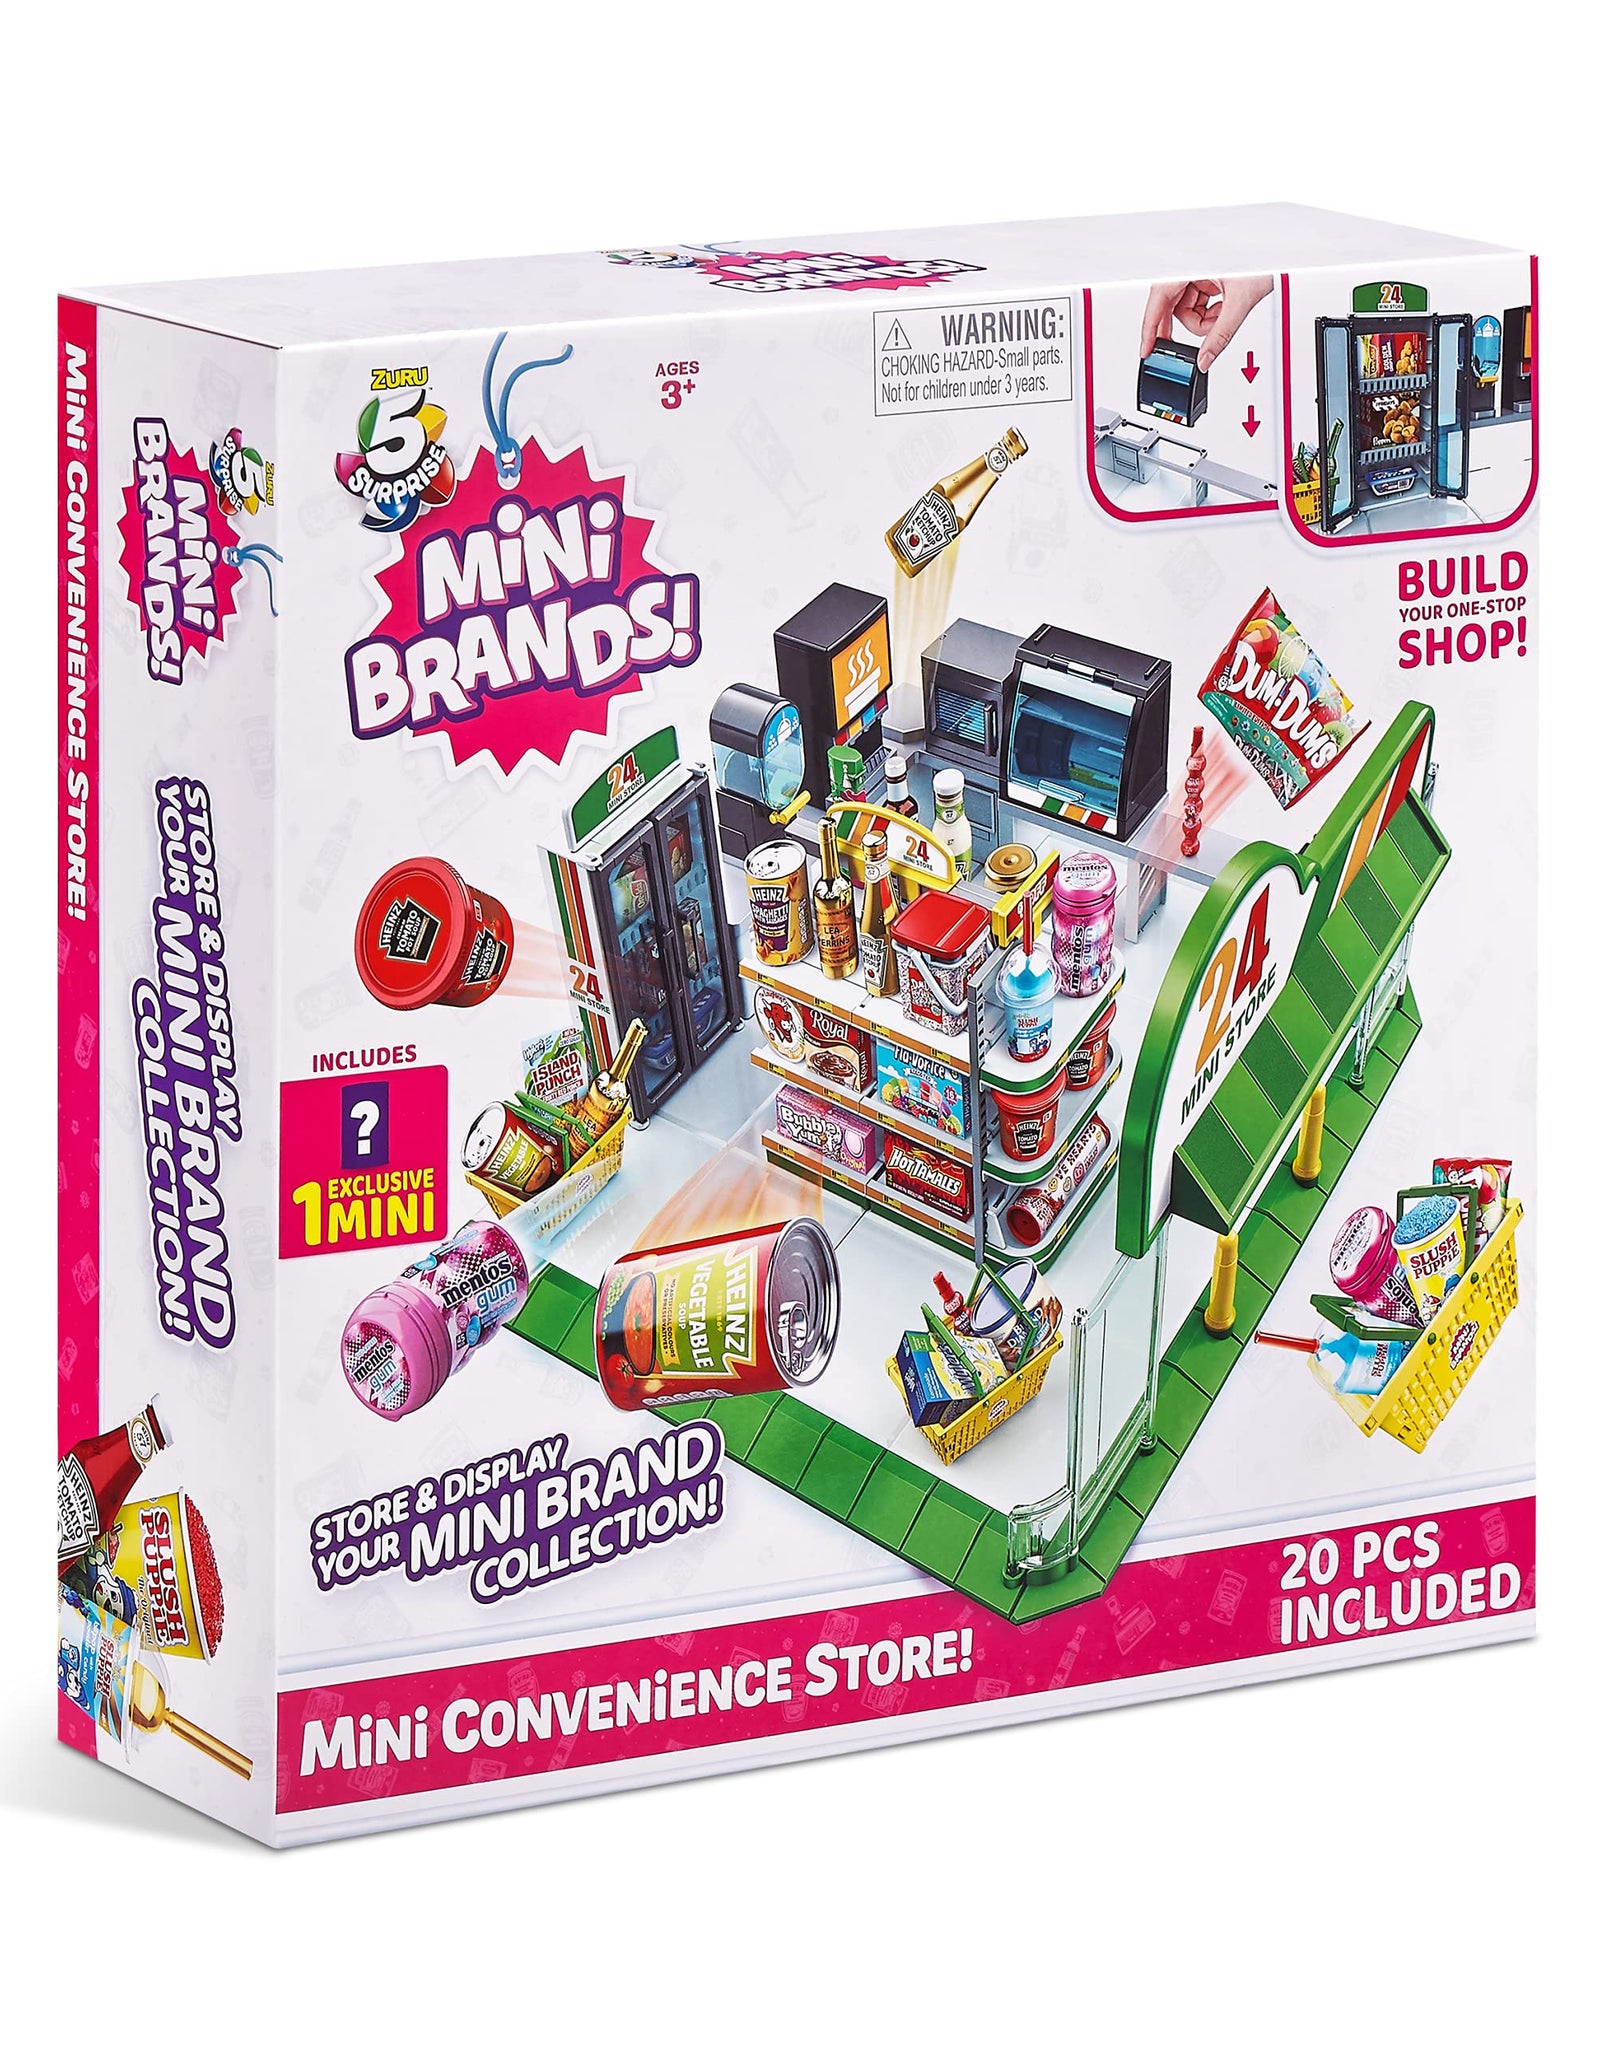 5 Surprise Mini Brands Mini Convenience Store Playset with 1 Exclusive Mini by ZURU